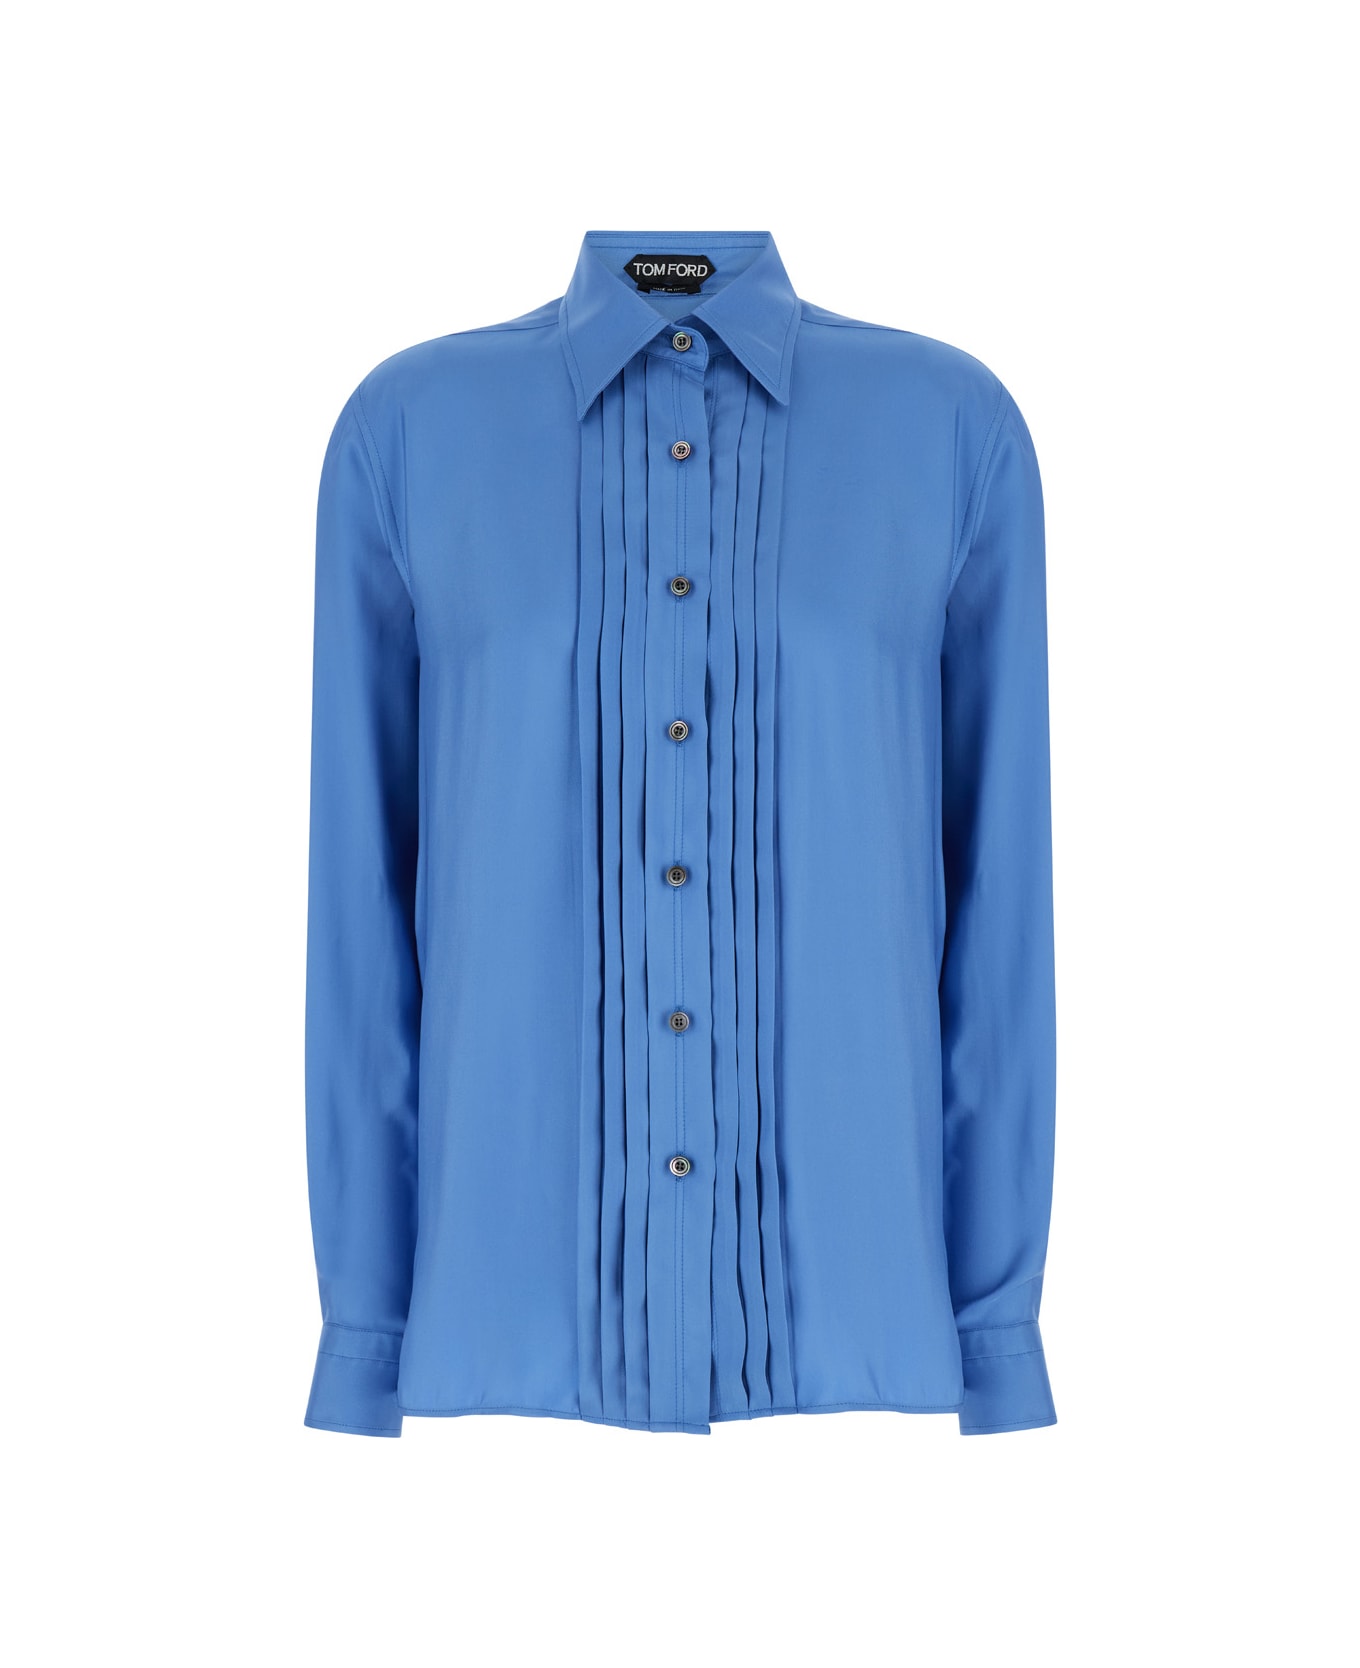 Tom Ford Pleated Plastron Shirt - Blu シャツ